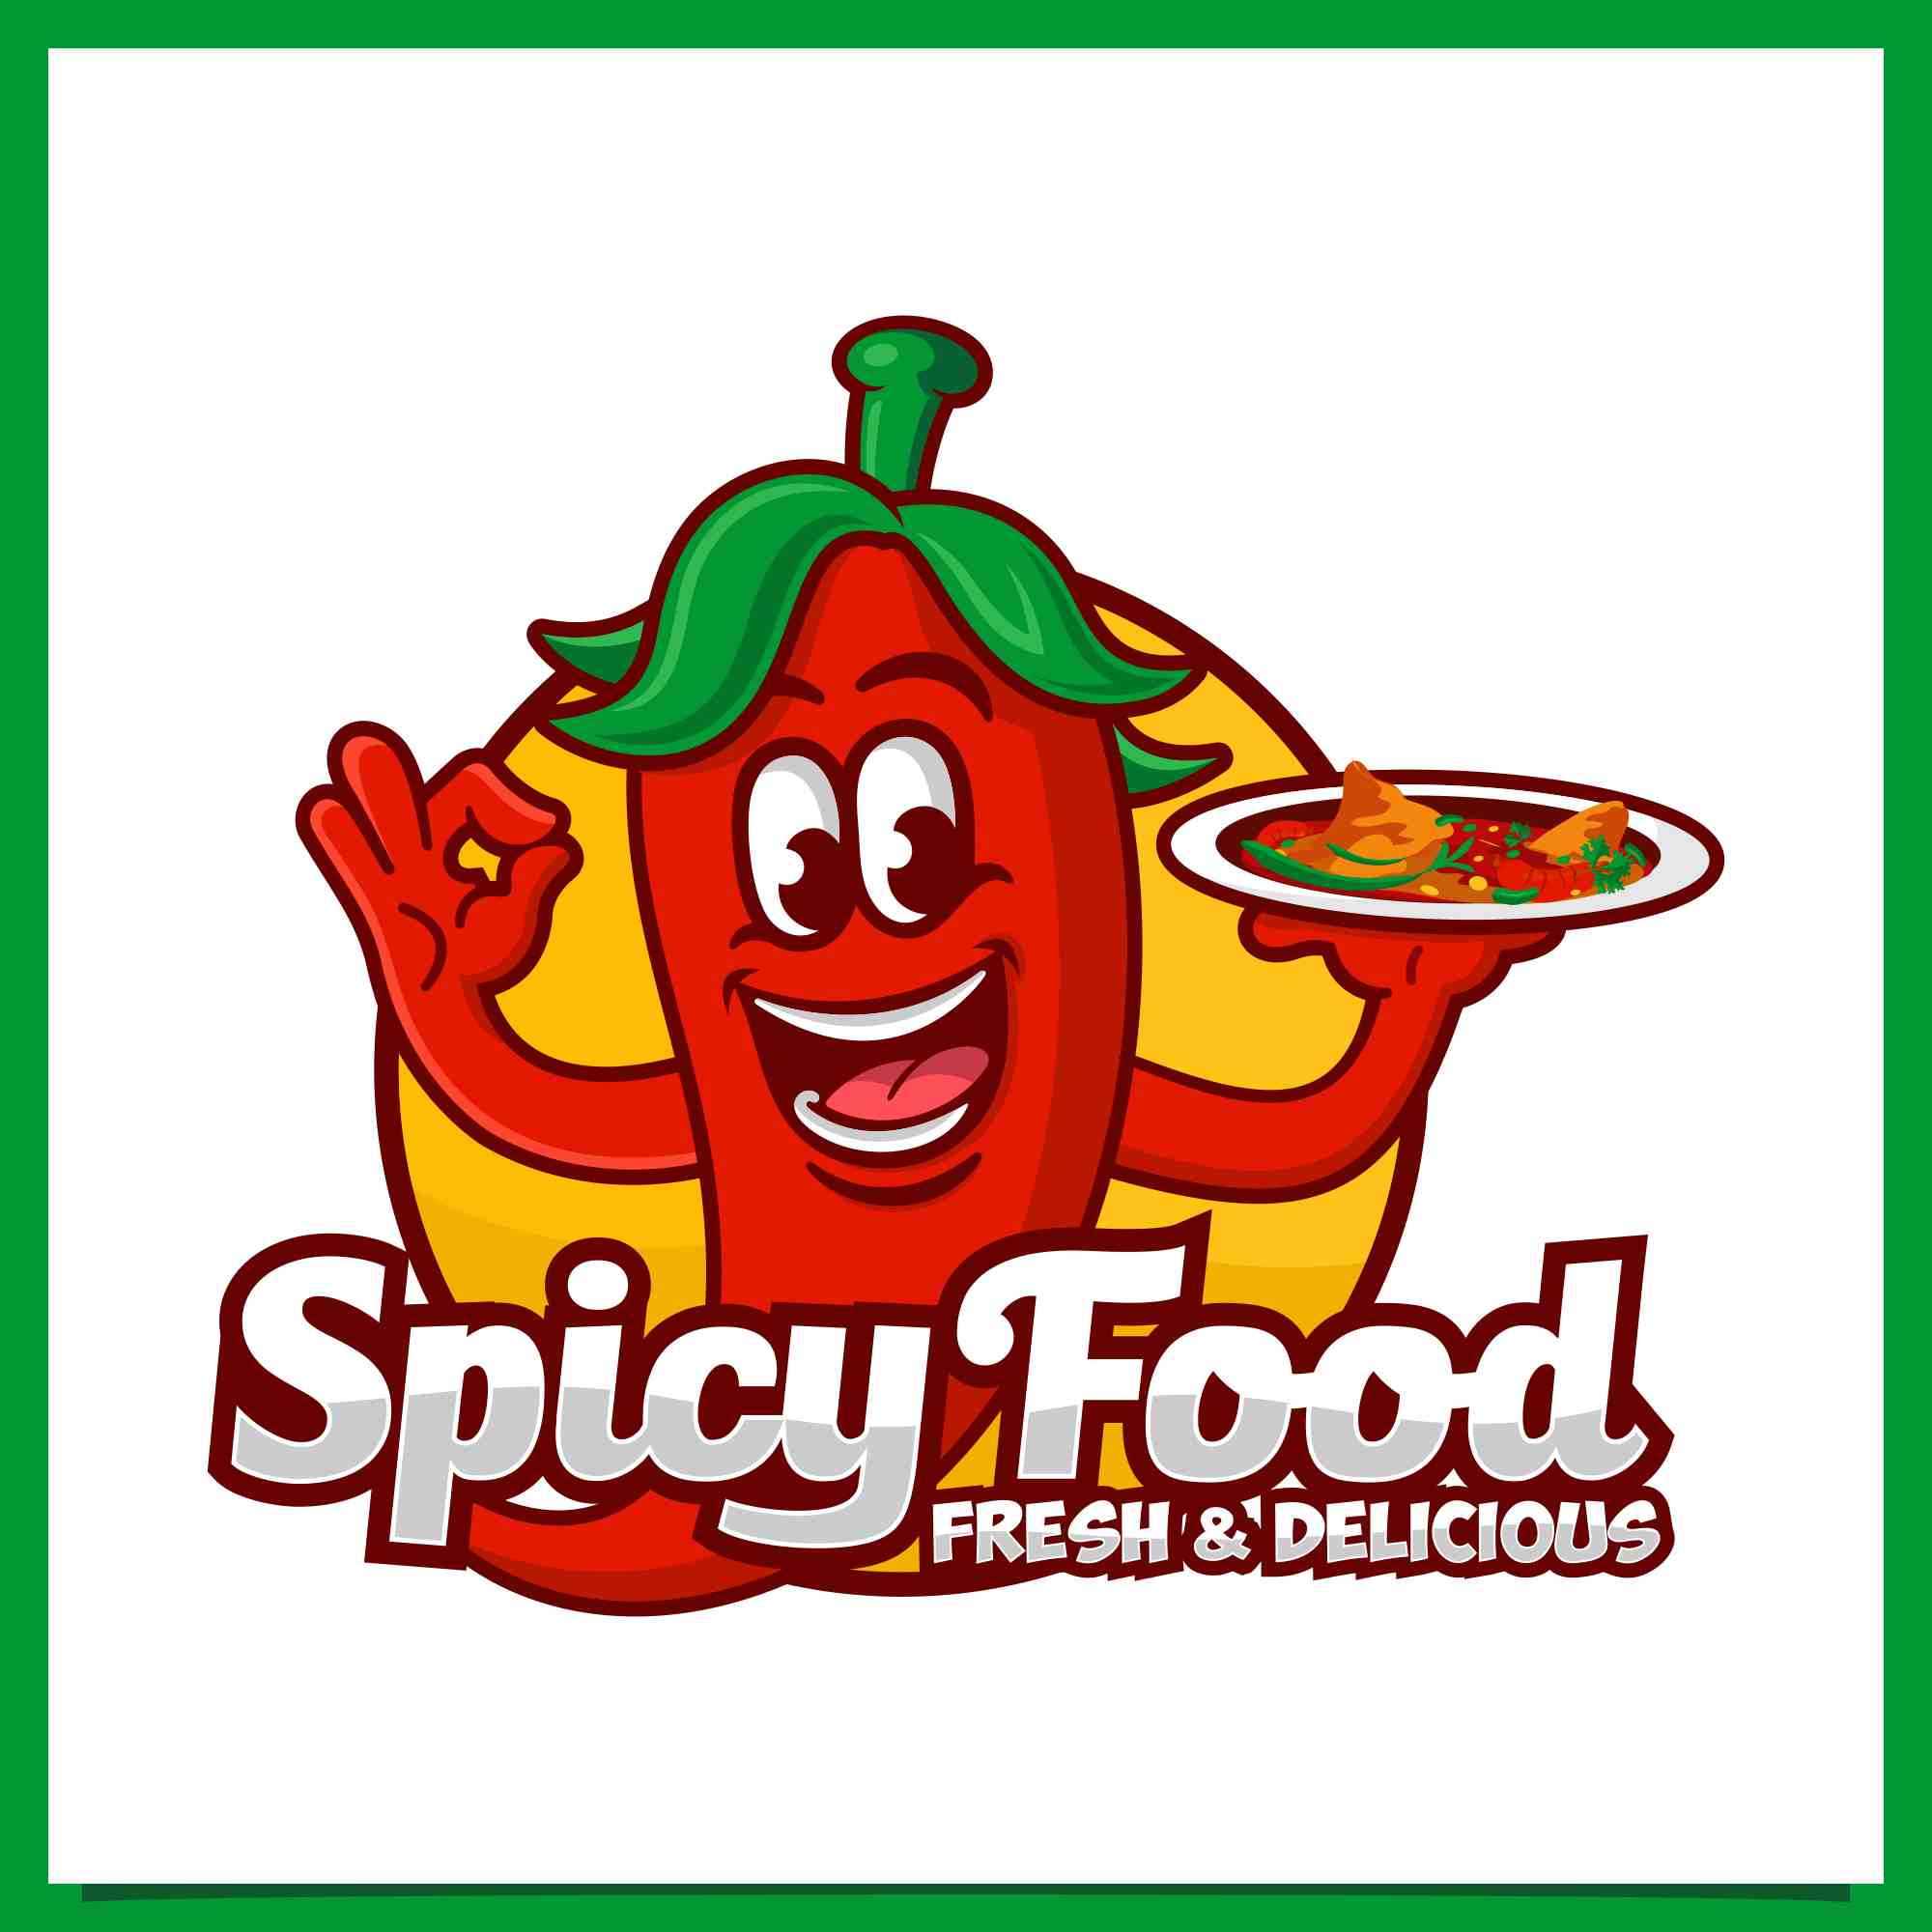 Spicy food logo design illustration - $6 preview image.